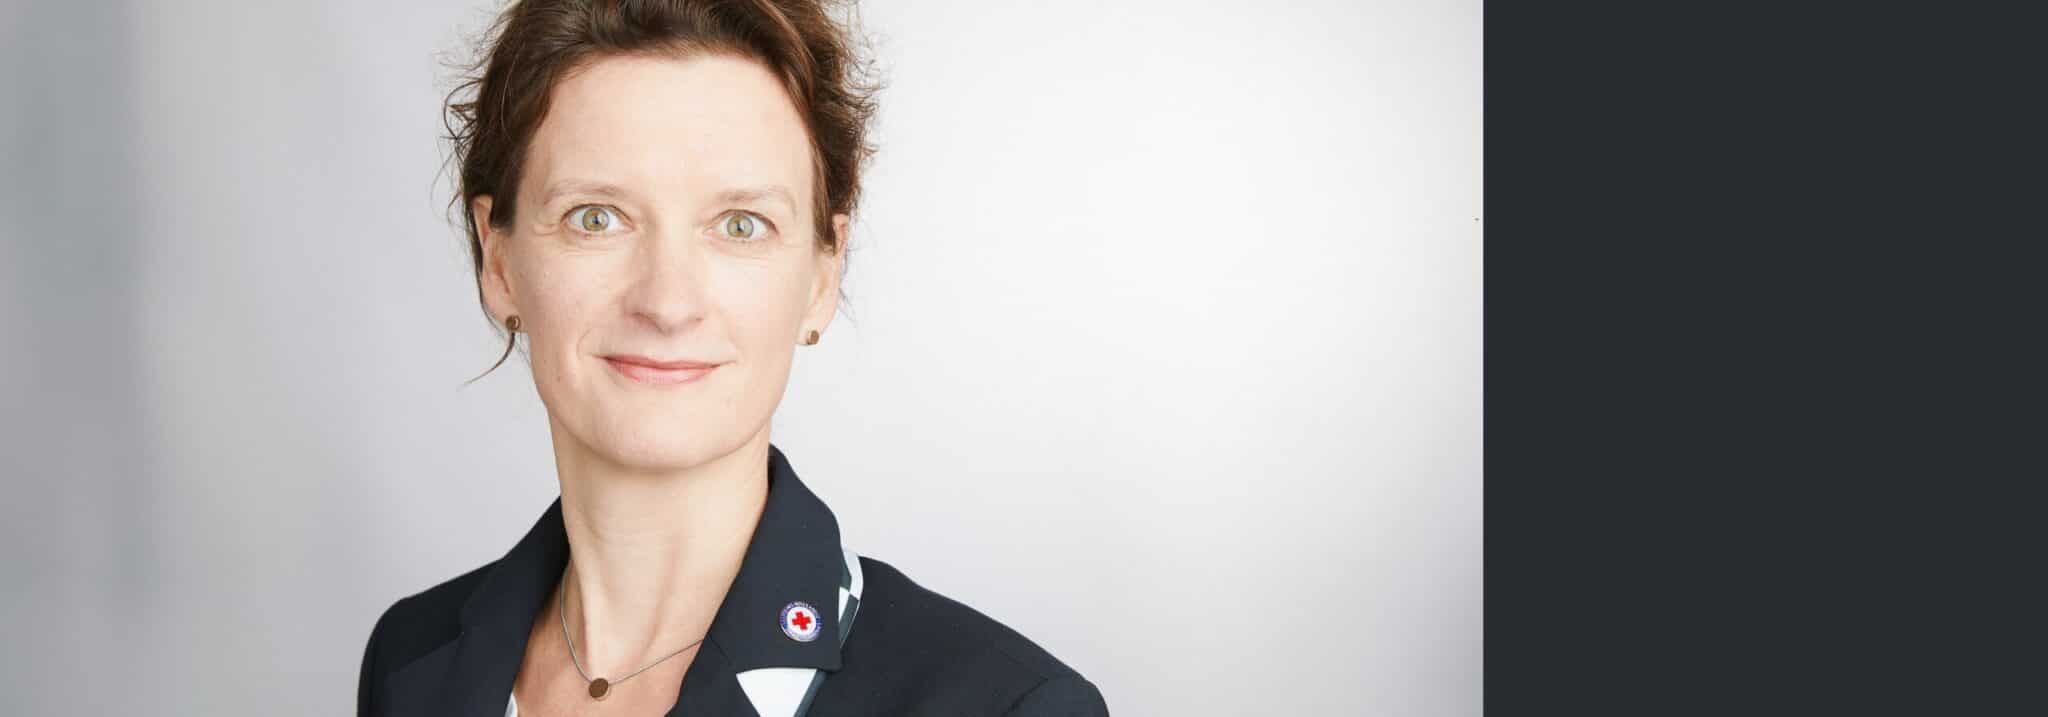 Pflegedienstleiterin Astrid Weber, DRK Kliniken Berlin Köpenick